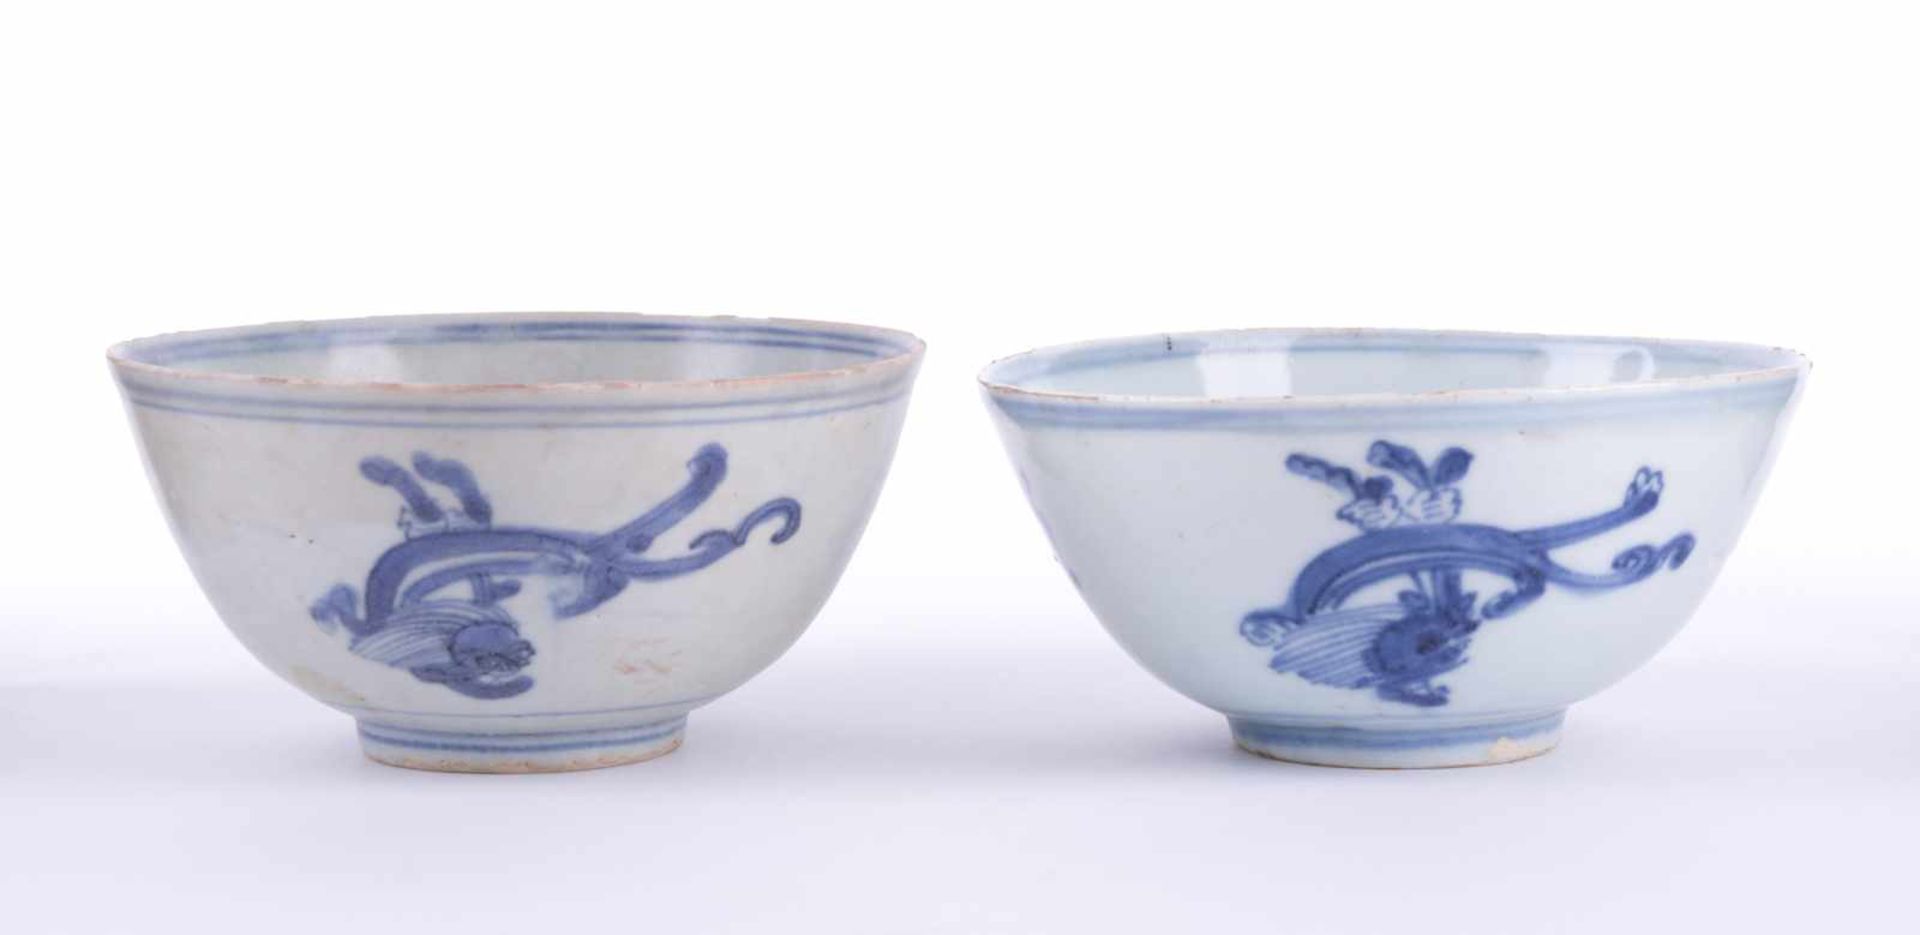 2 Kummen China Mingperiode mit blau-weiß Malerei, H: je 6,3 cm, Ø je 12,5 cm 2 bowls, China Ming